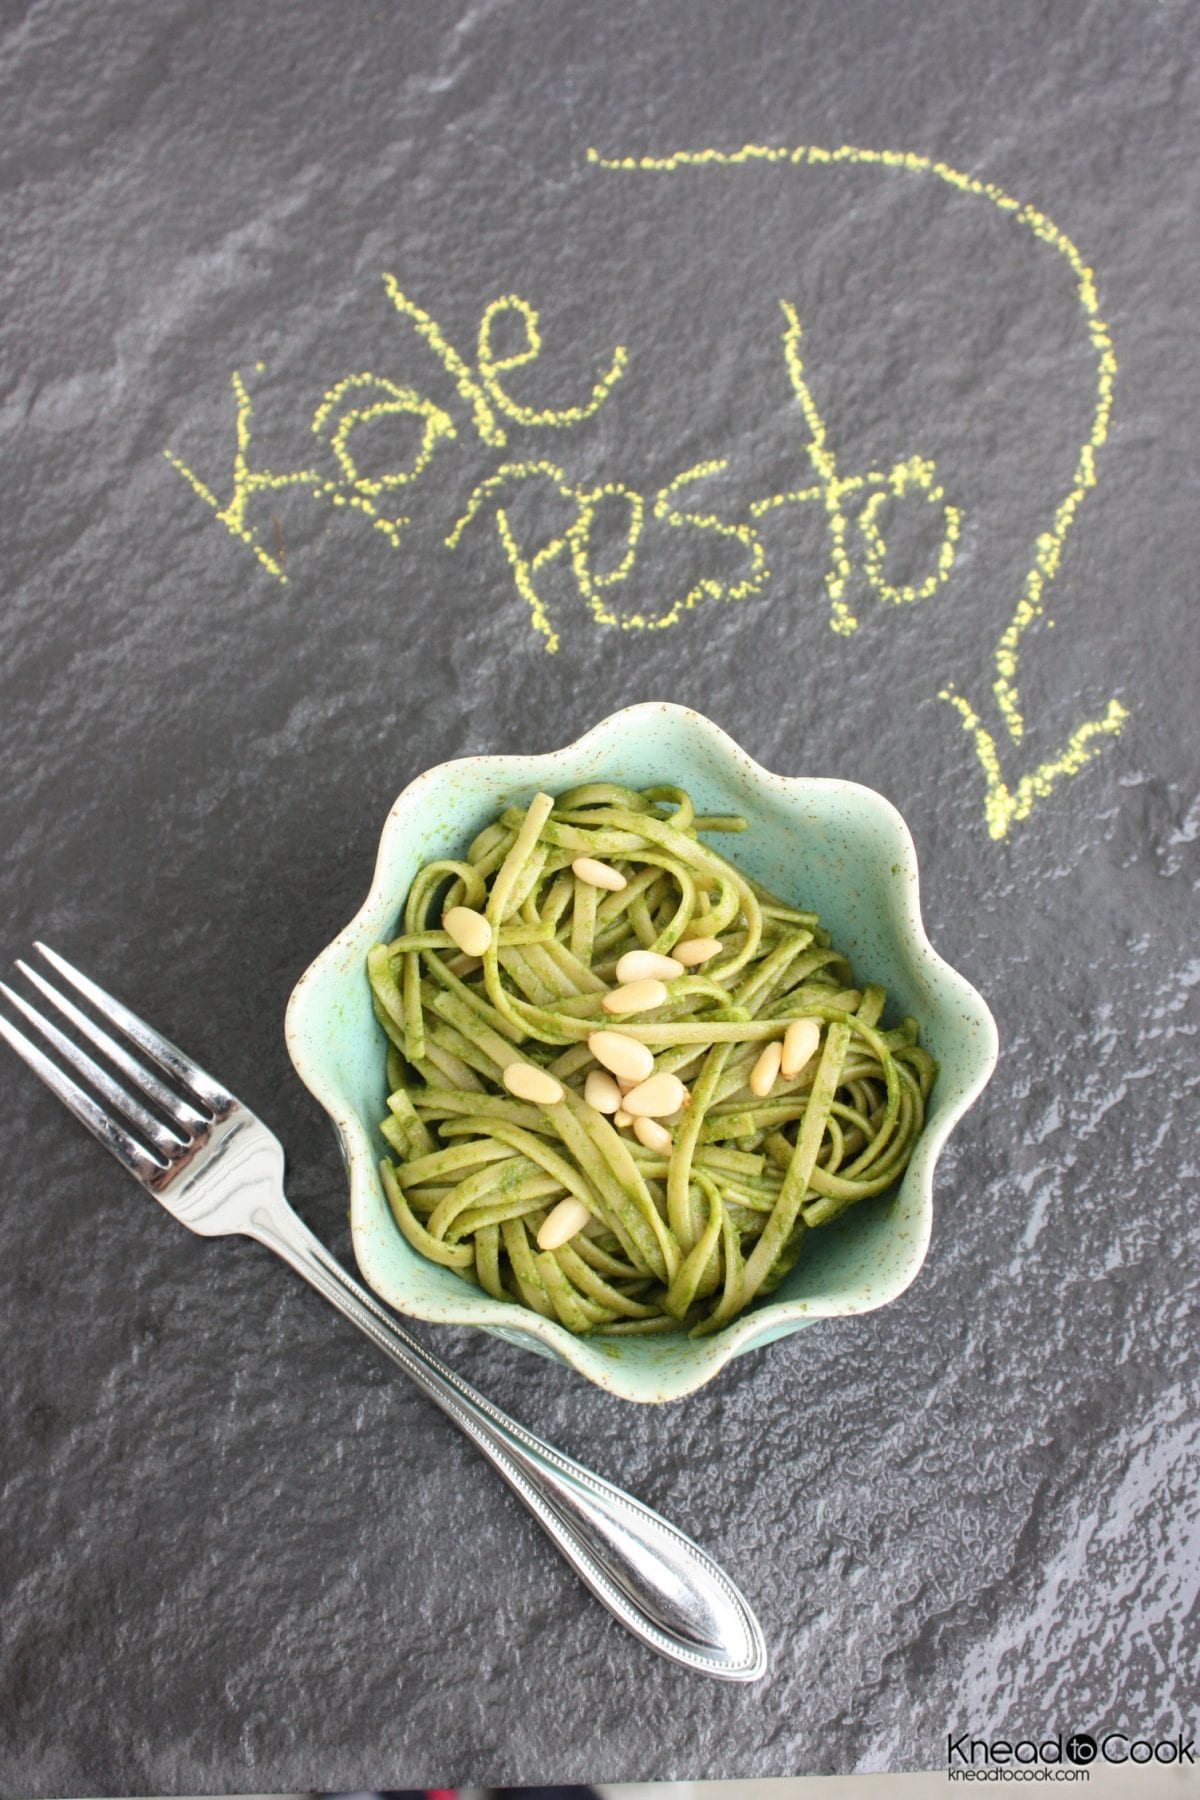 Kale and Basil Pesto